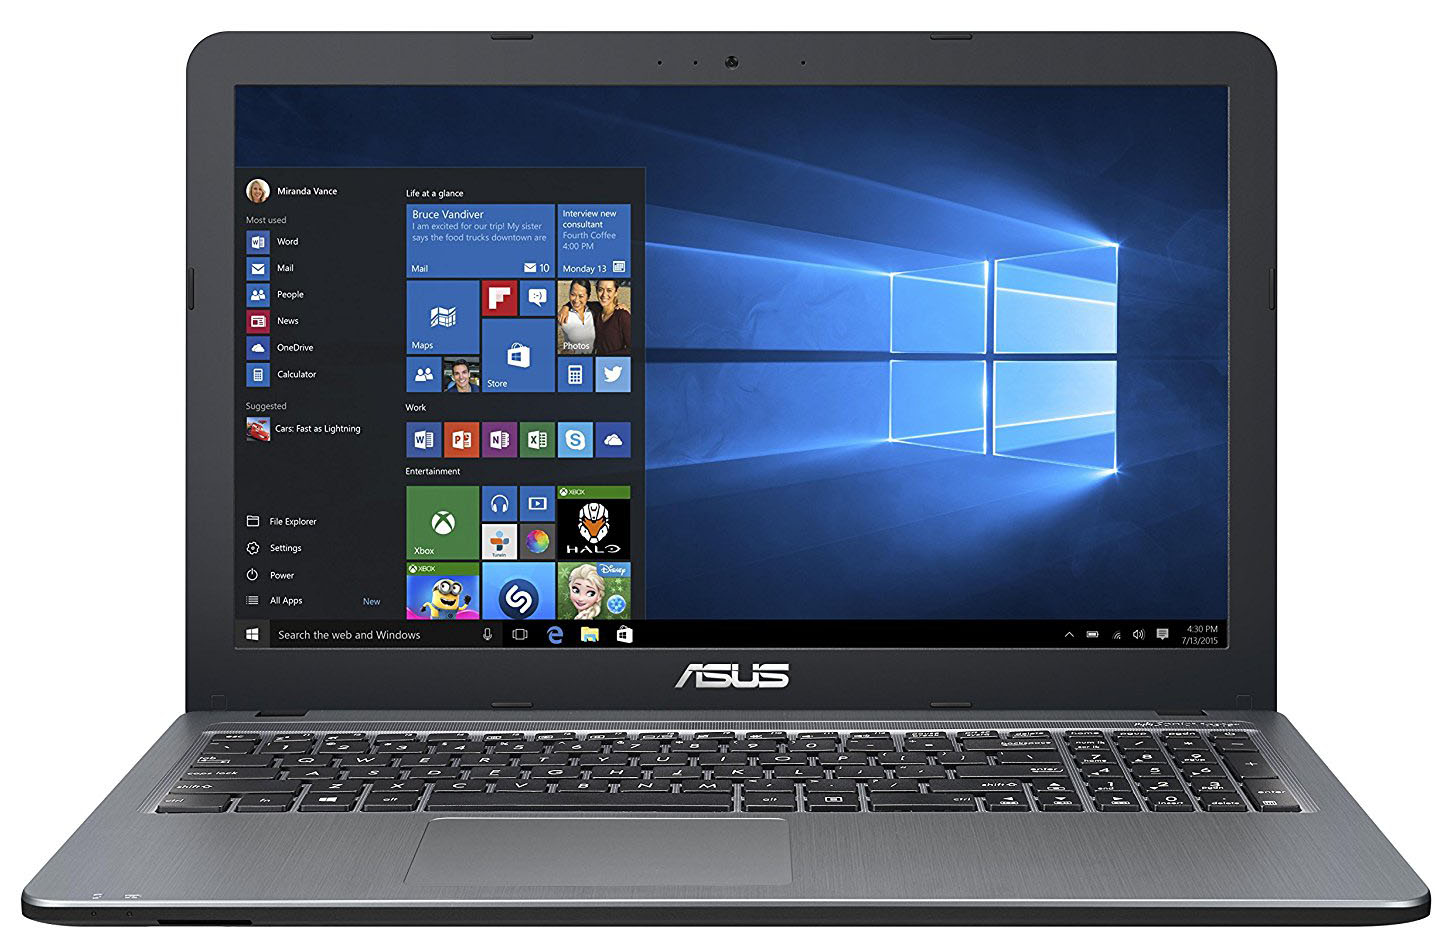 ASUS VivoBook X540 - Specs, Tests, and Prices | LaptopMedia.com